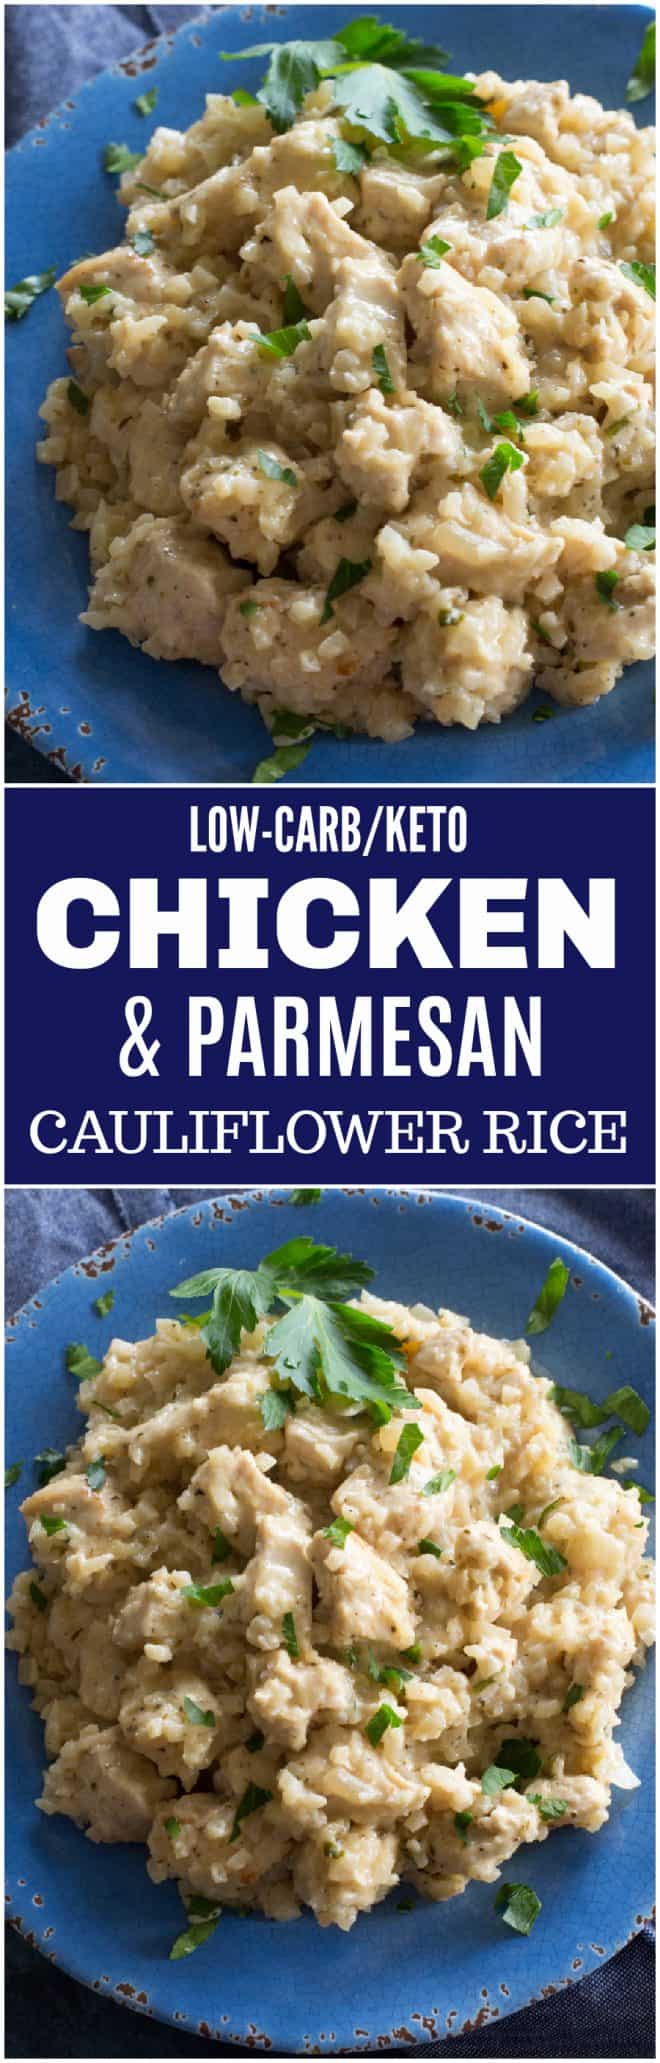 fb image - Chicken with Parmesan Cauliflower Rice